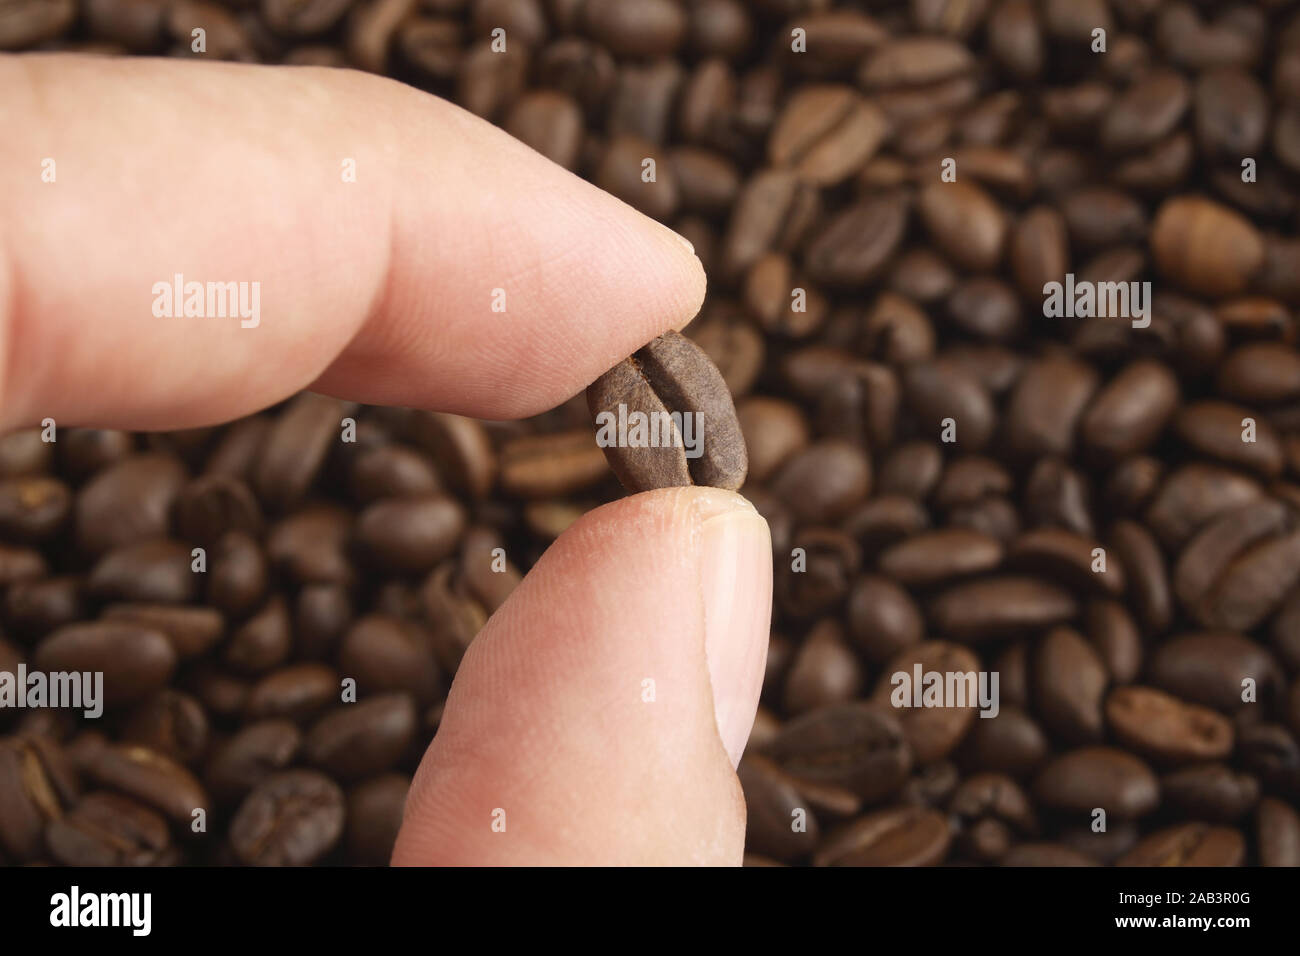 Dito mit Kaffeebohne Foto Stock